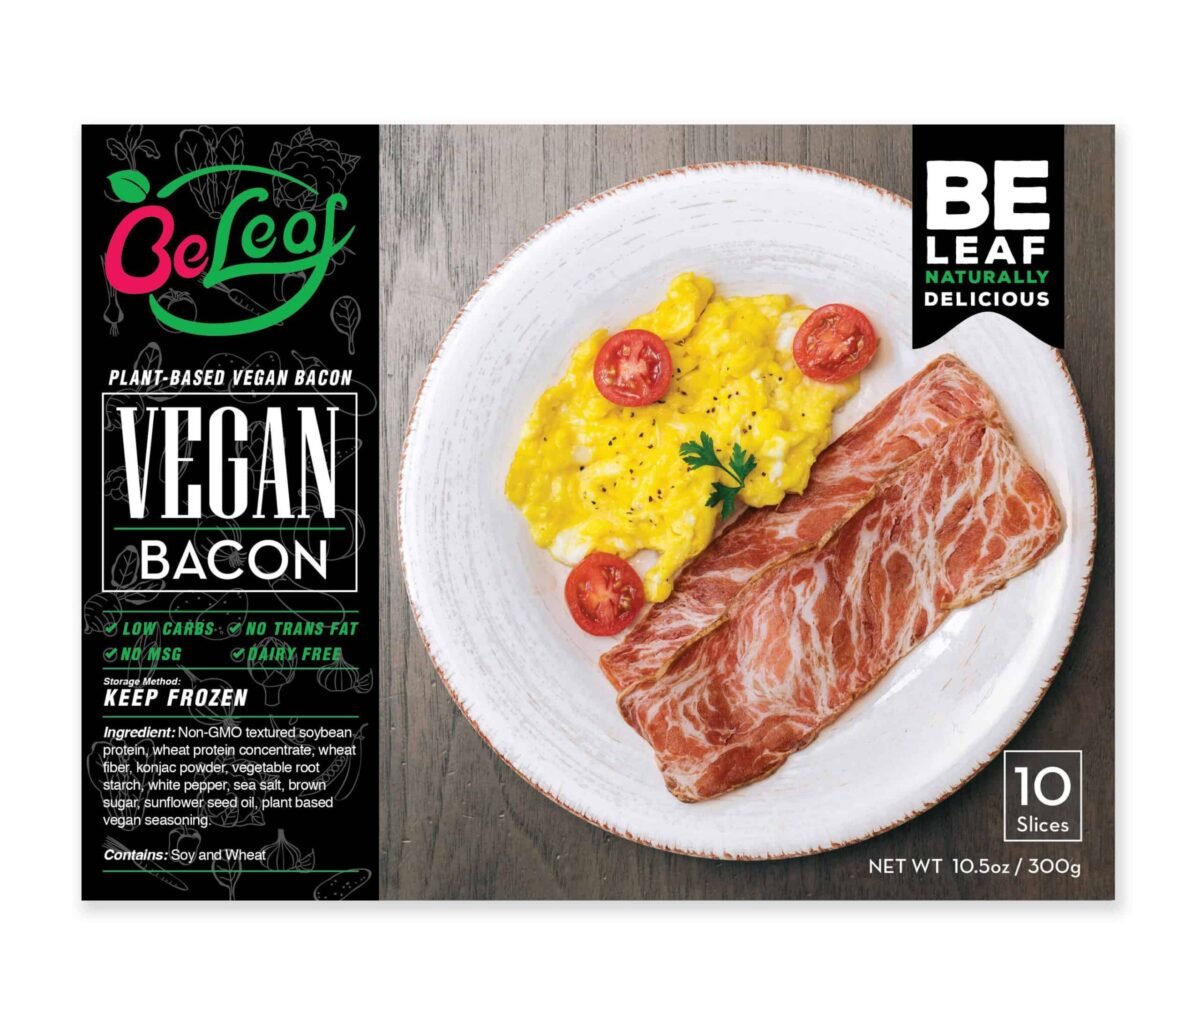 BeLeaf vegan bacon